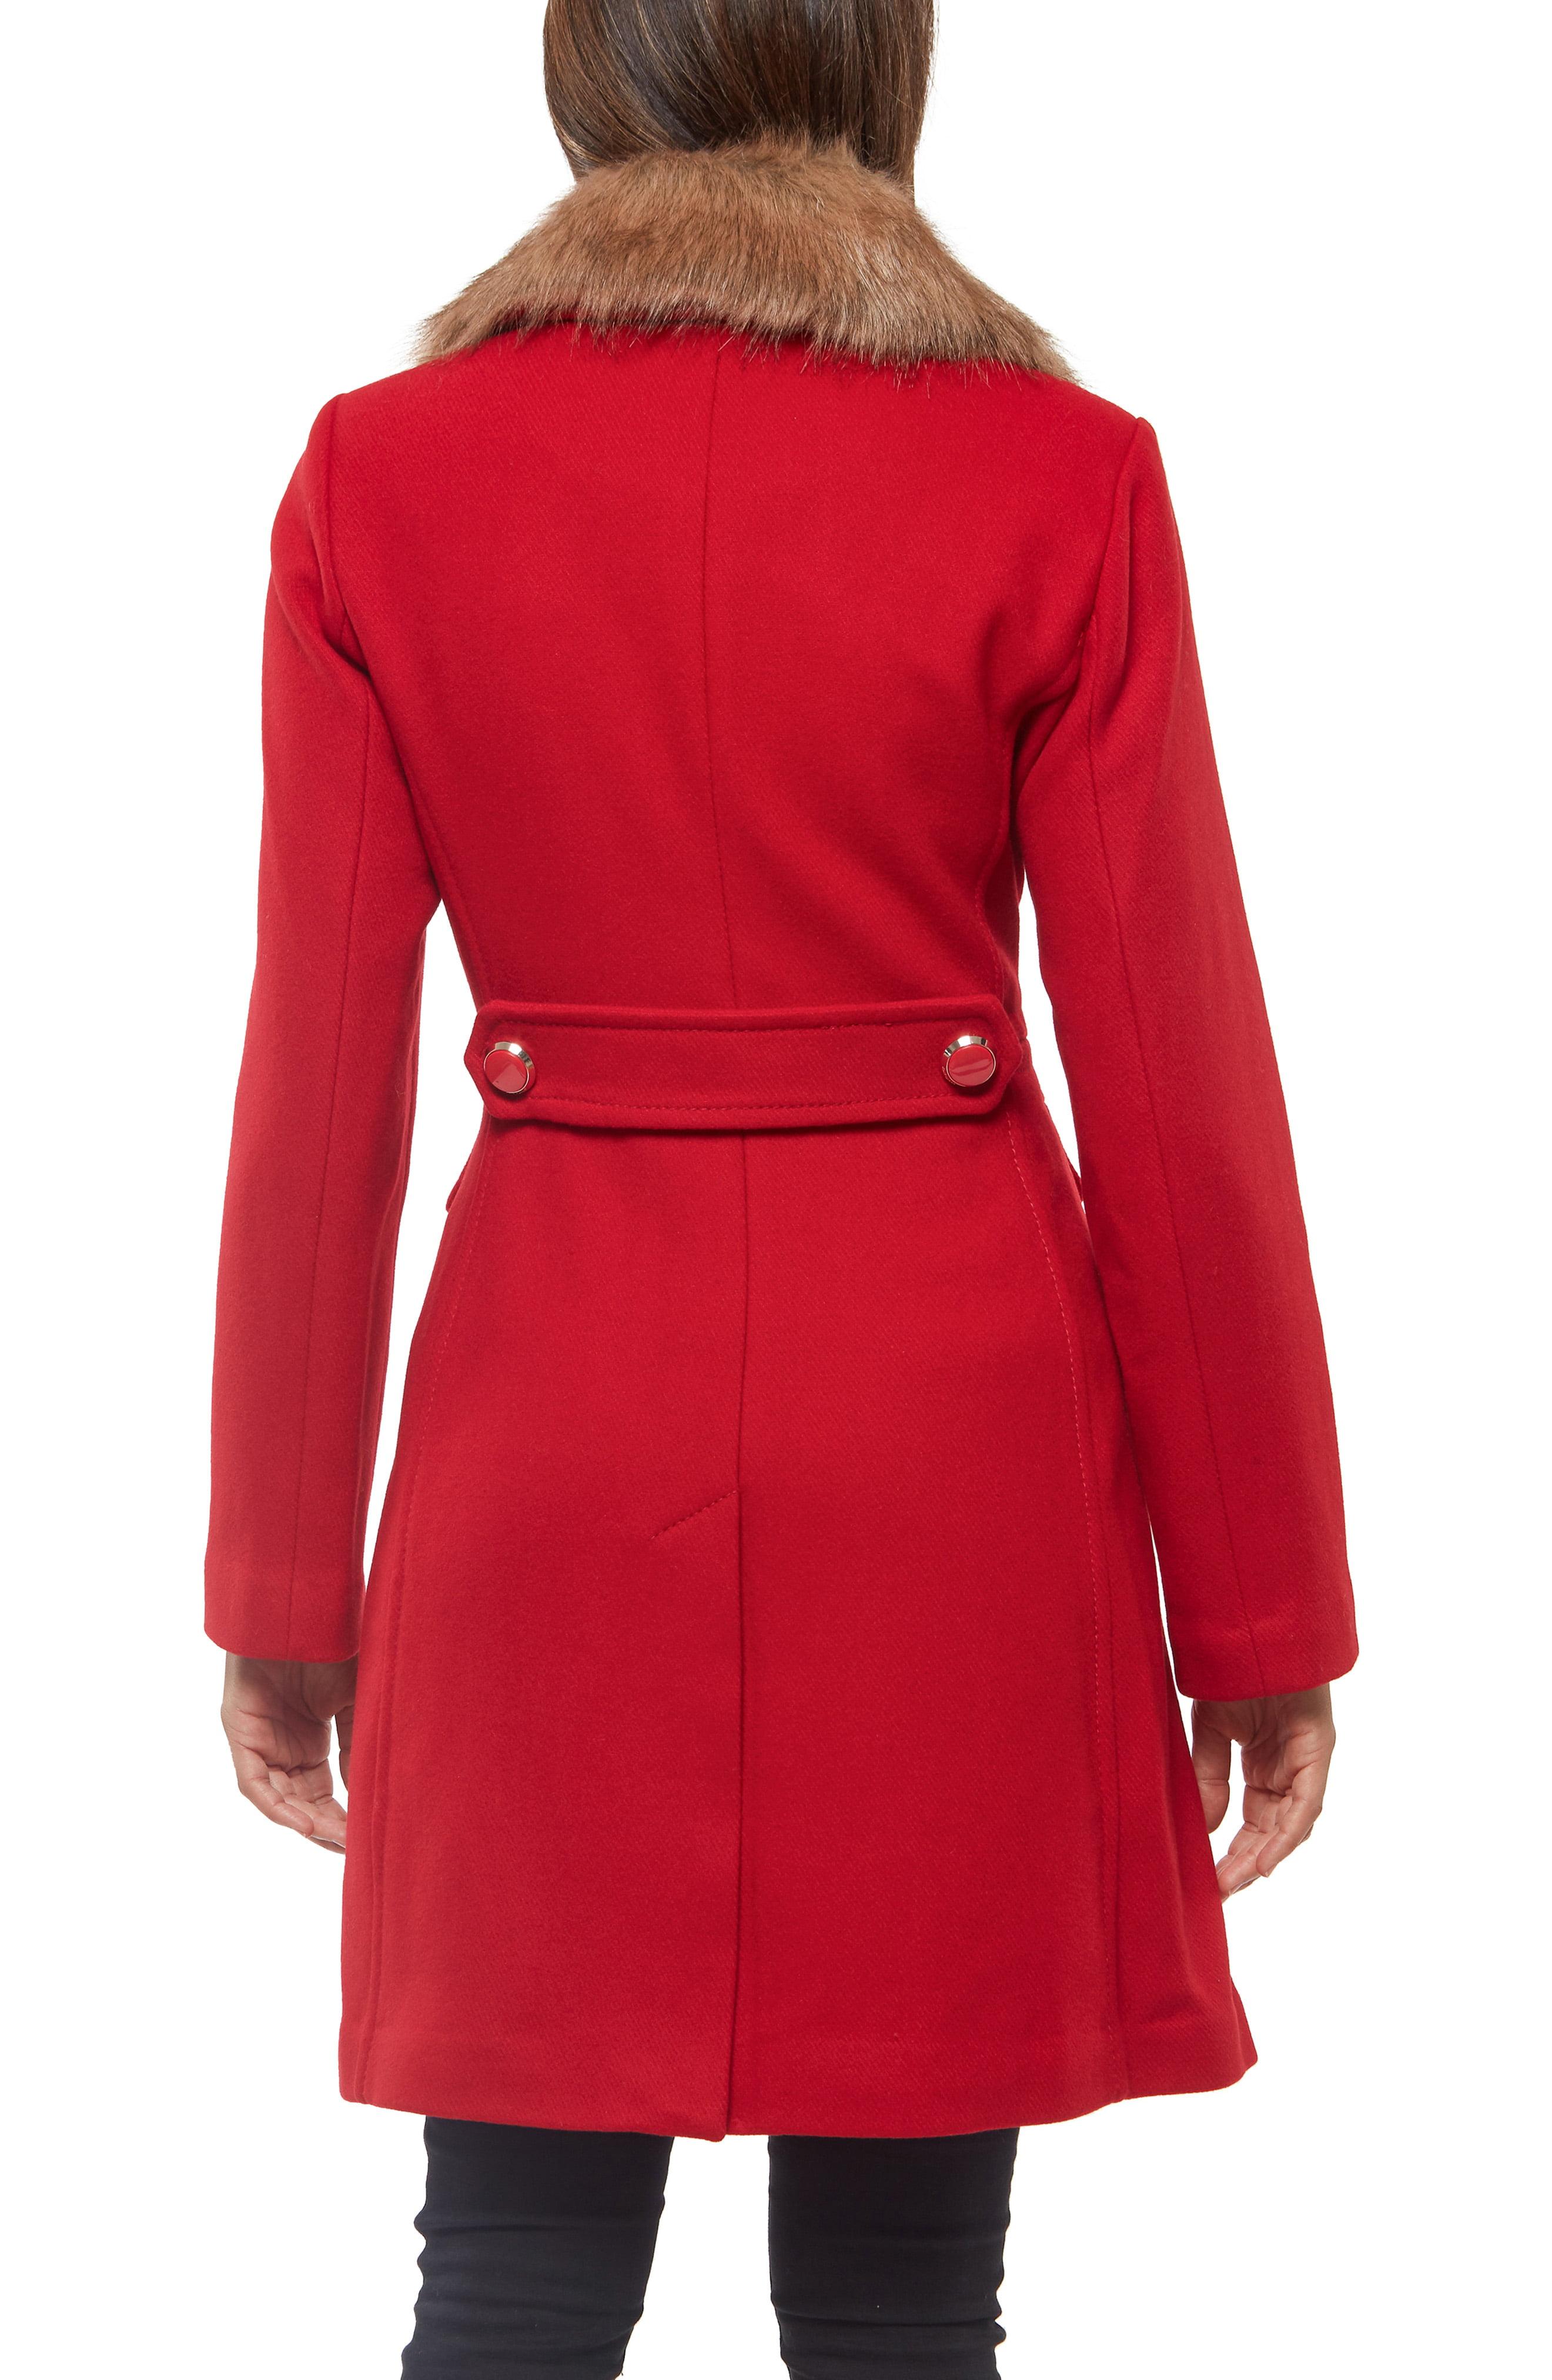 Kate Spade Faux Fur Collar Wool Blend Coat in Red - Lyst